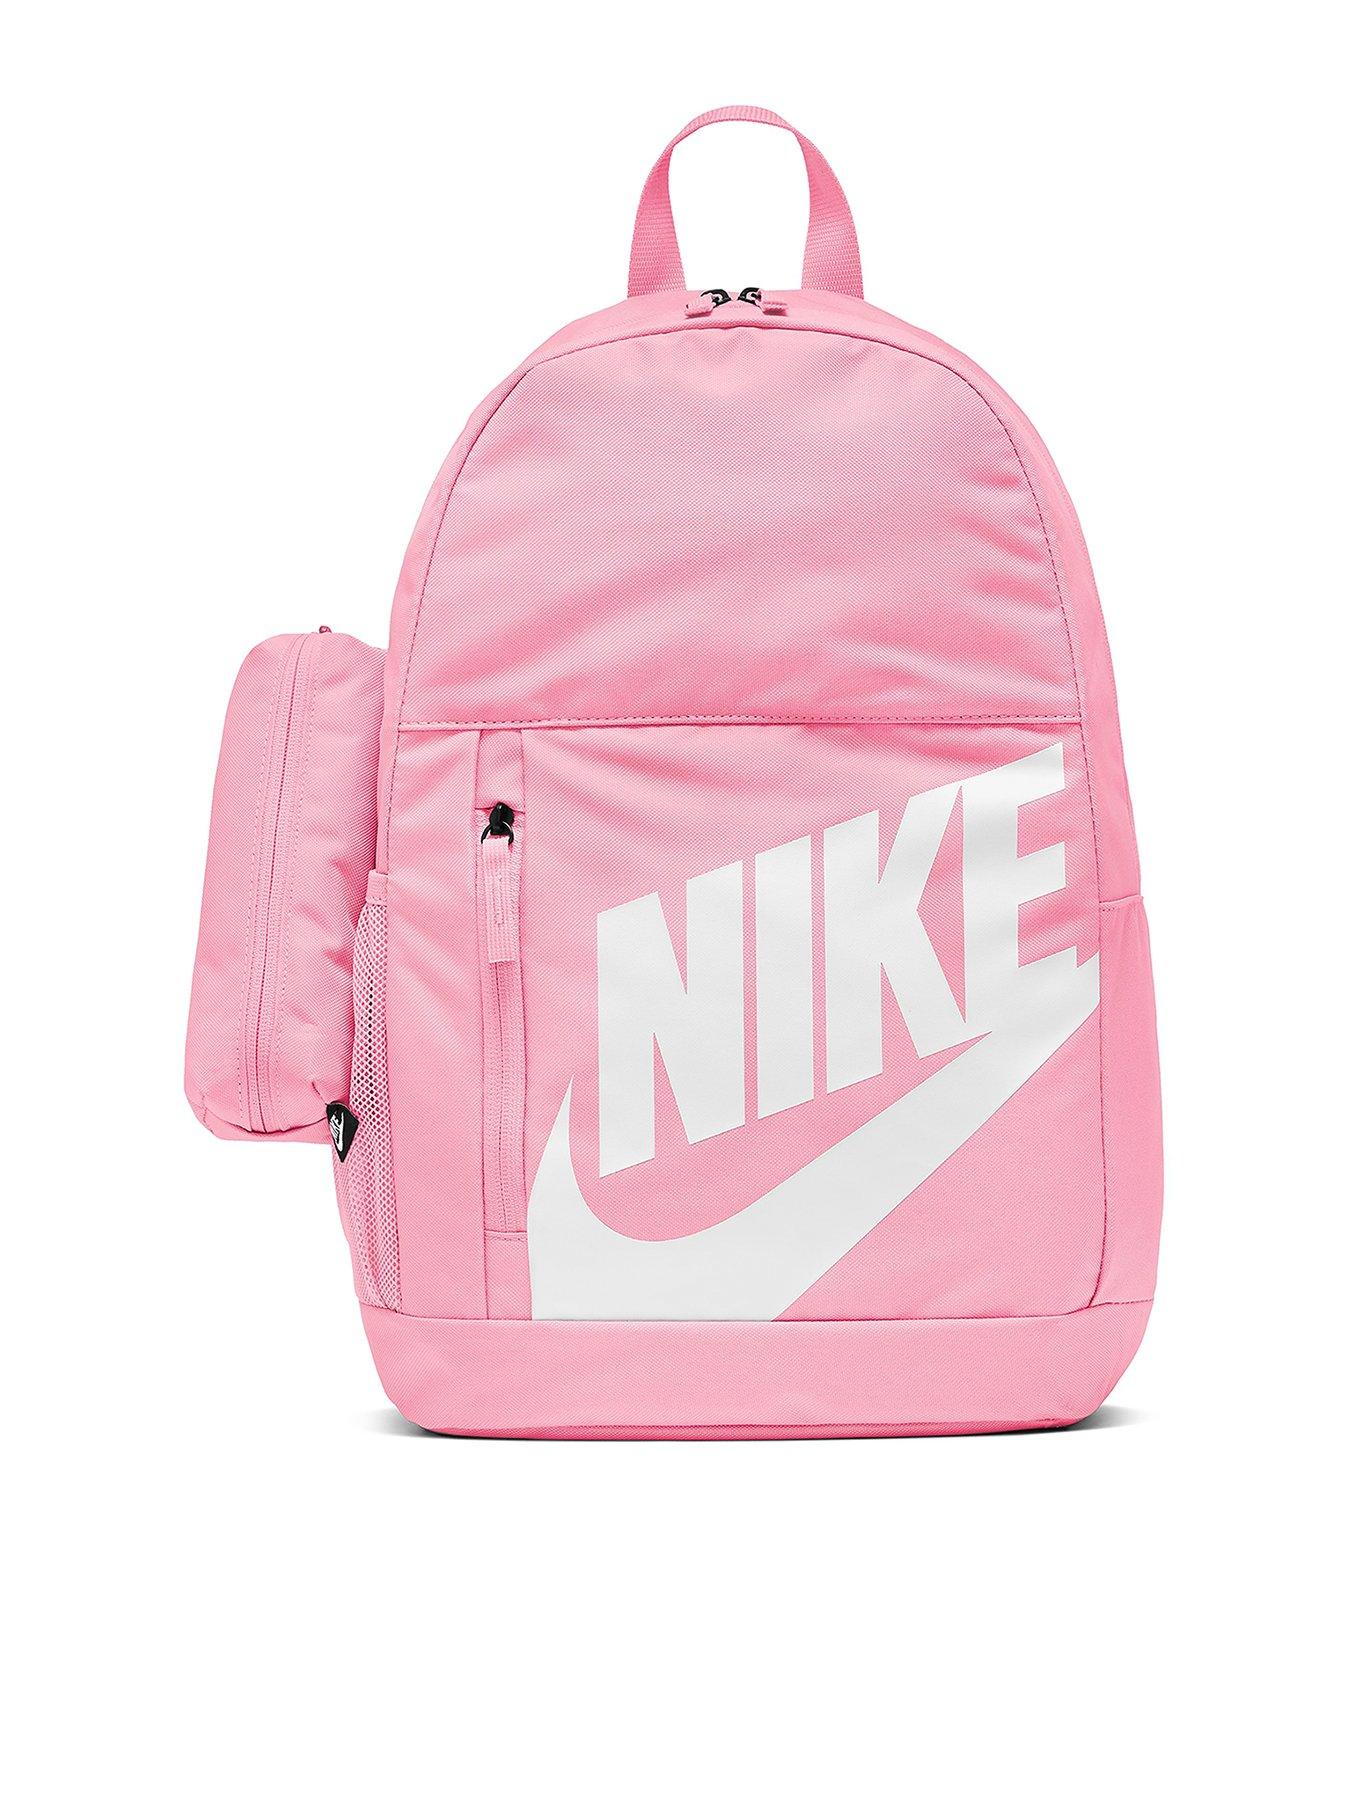 pink nike backpacks for school